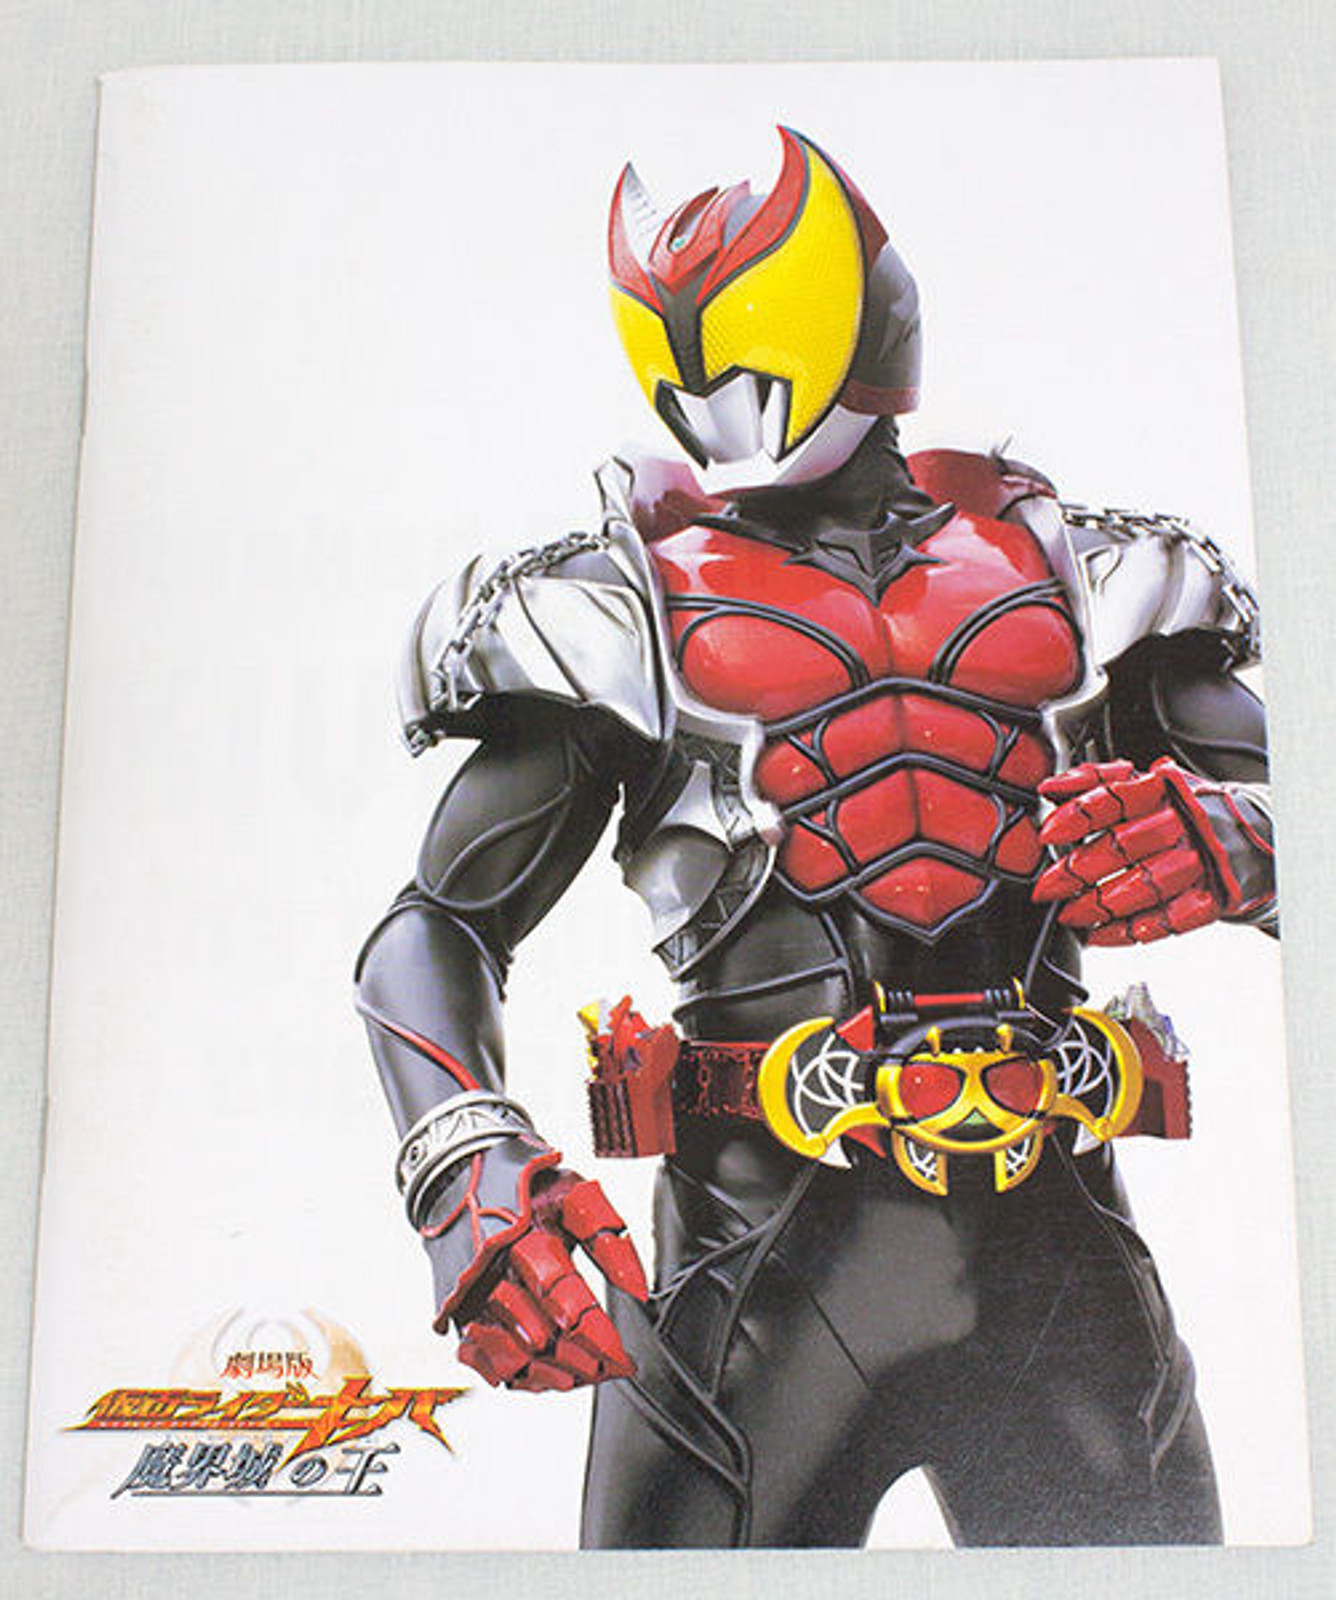 GO-ONGER x Kamen Rider KIBA Movie Program Art Book w/DVD JAPAN TOKUSATSU